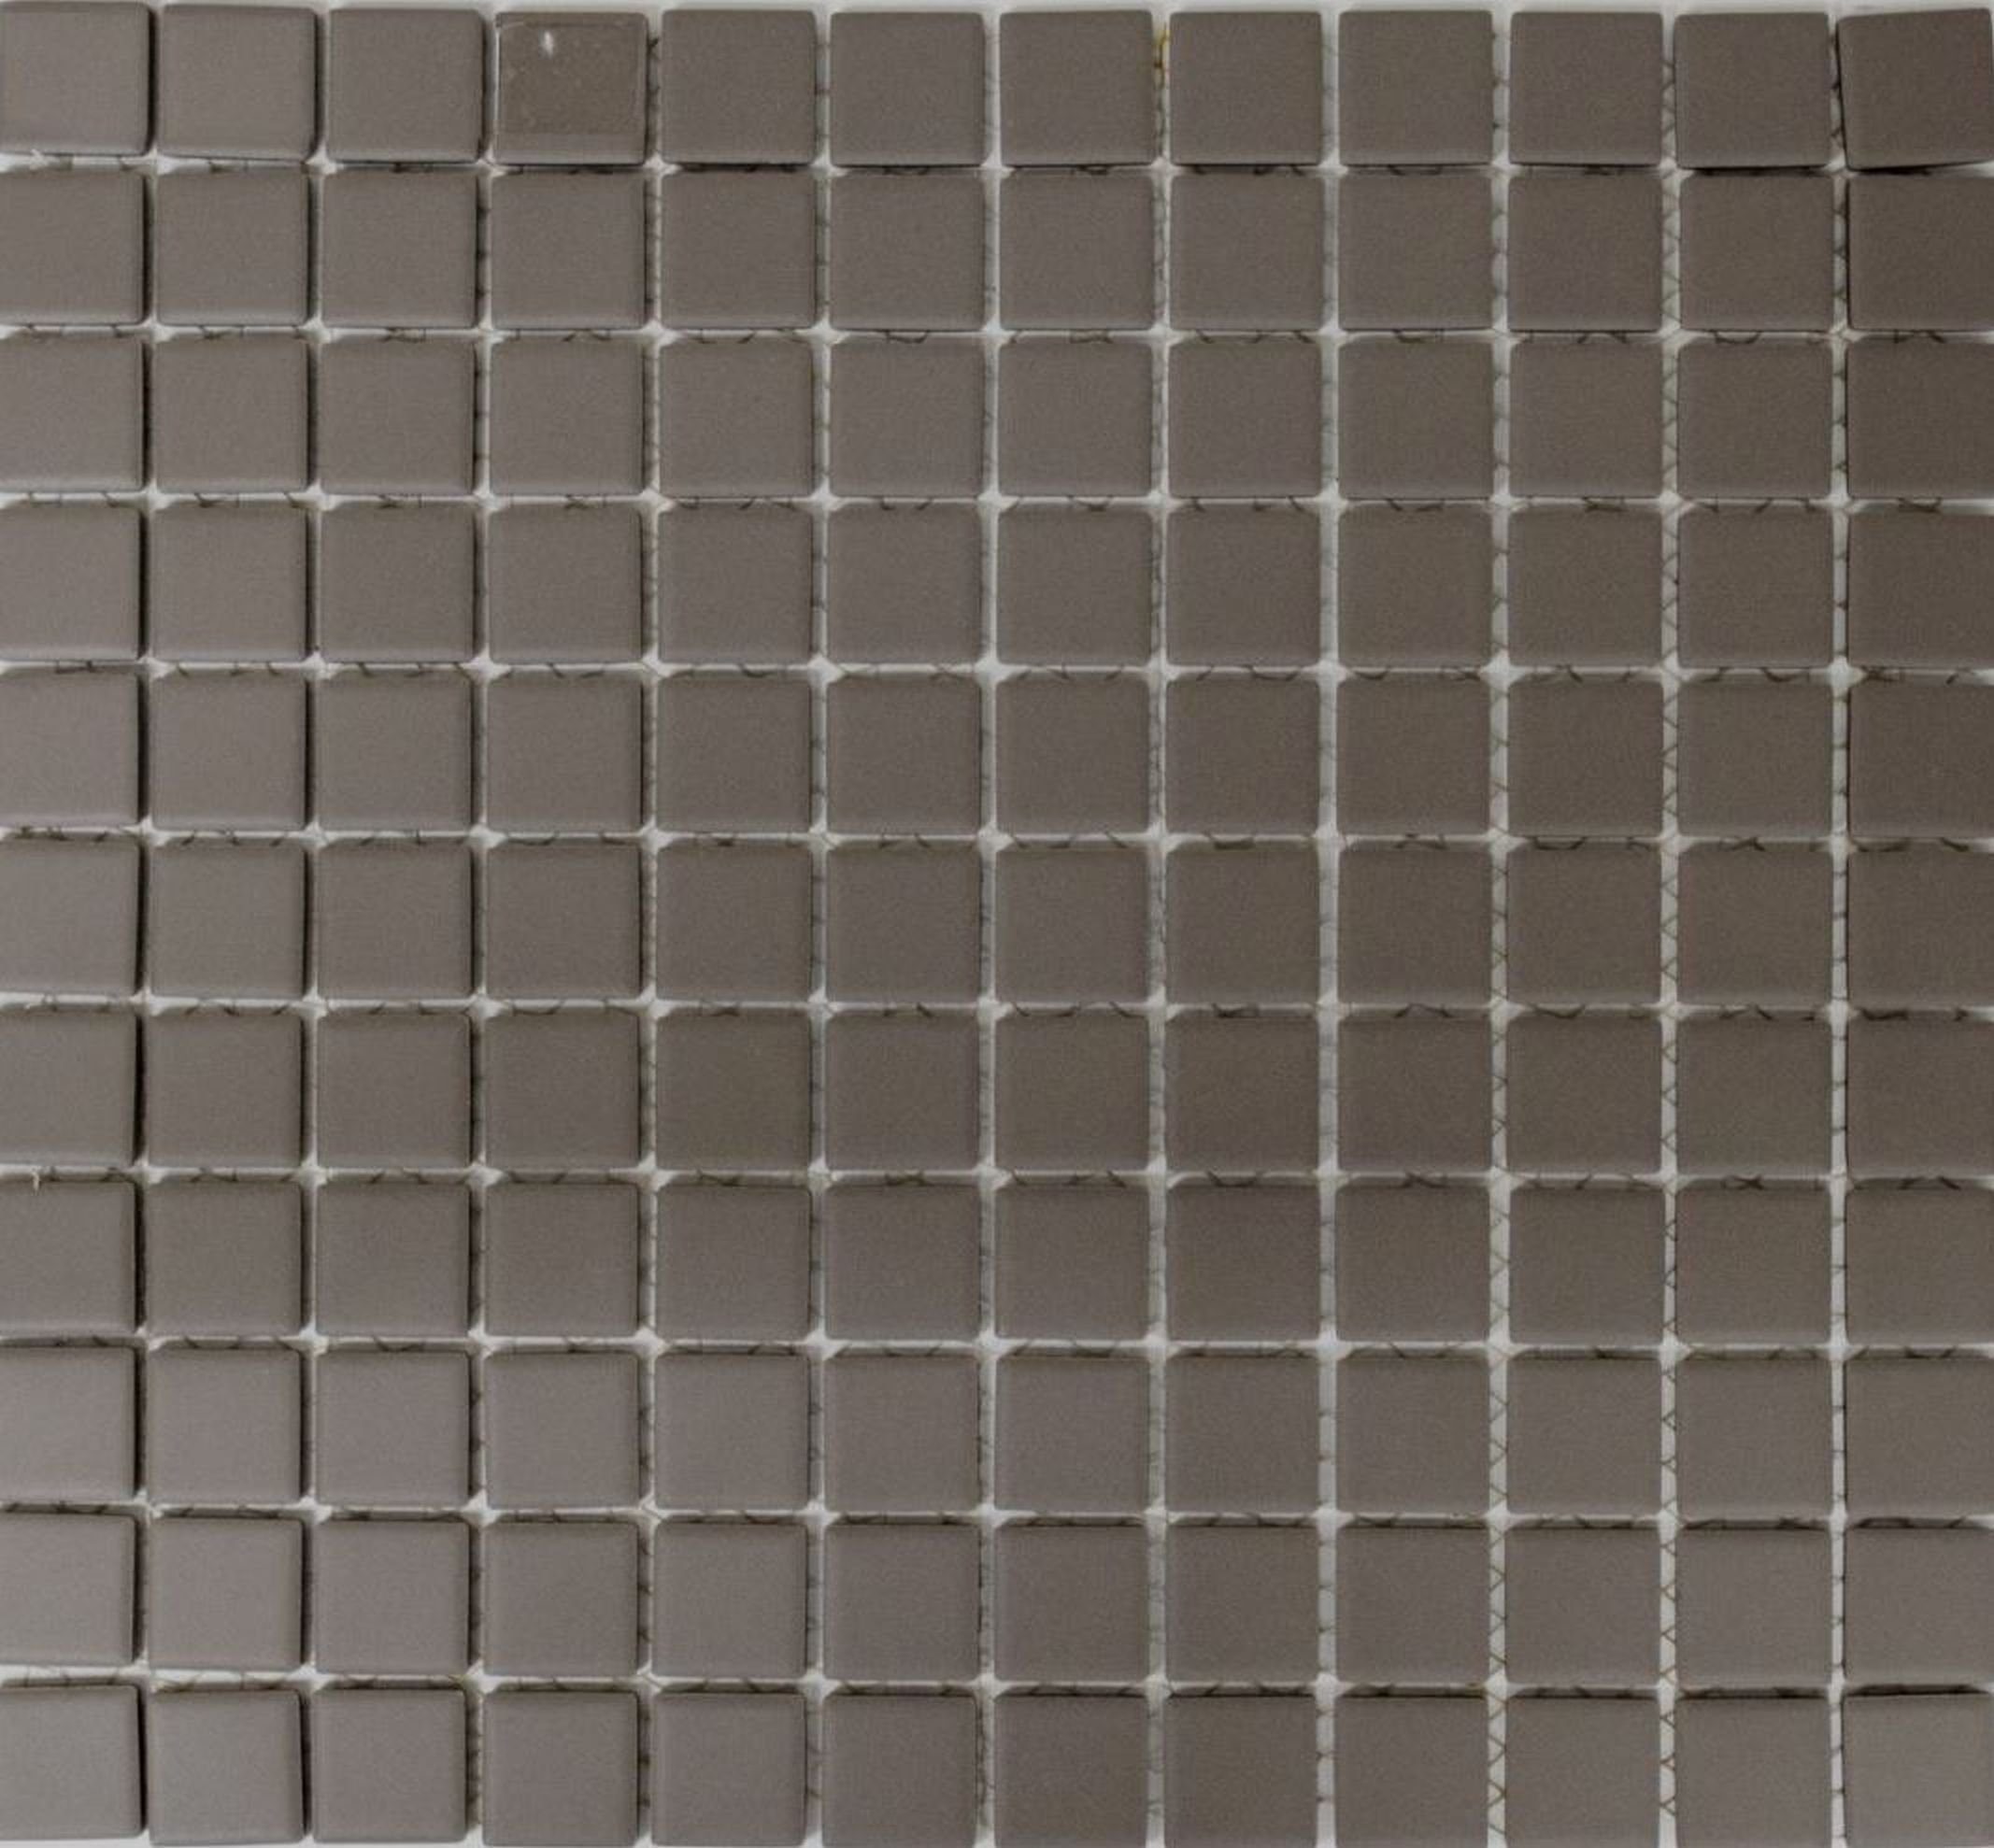 Mosani Mosaikfliesen Mosaik Fliese Keramik graubraun unglasiert rutschsicher Boden Küche | Fliesen